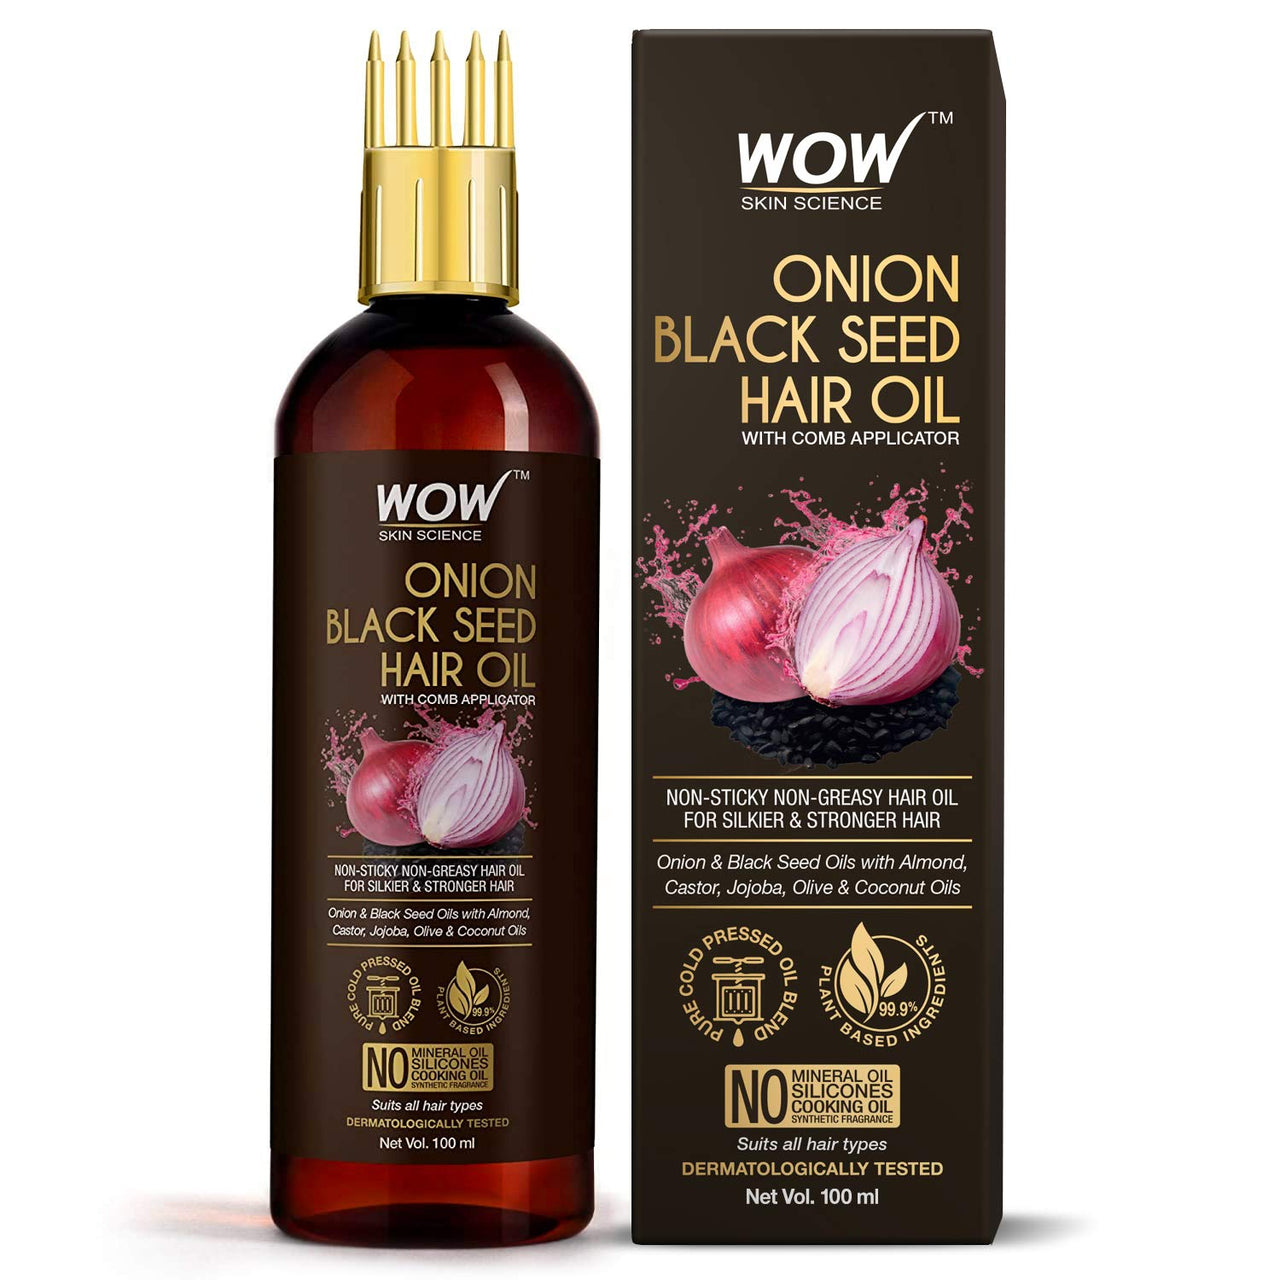 Wow Skin Science Onion Black Seed Hair Oil 100 ml